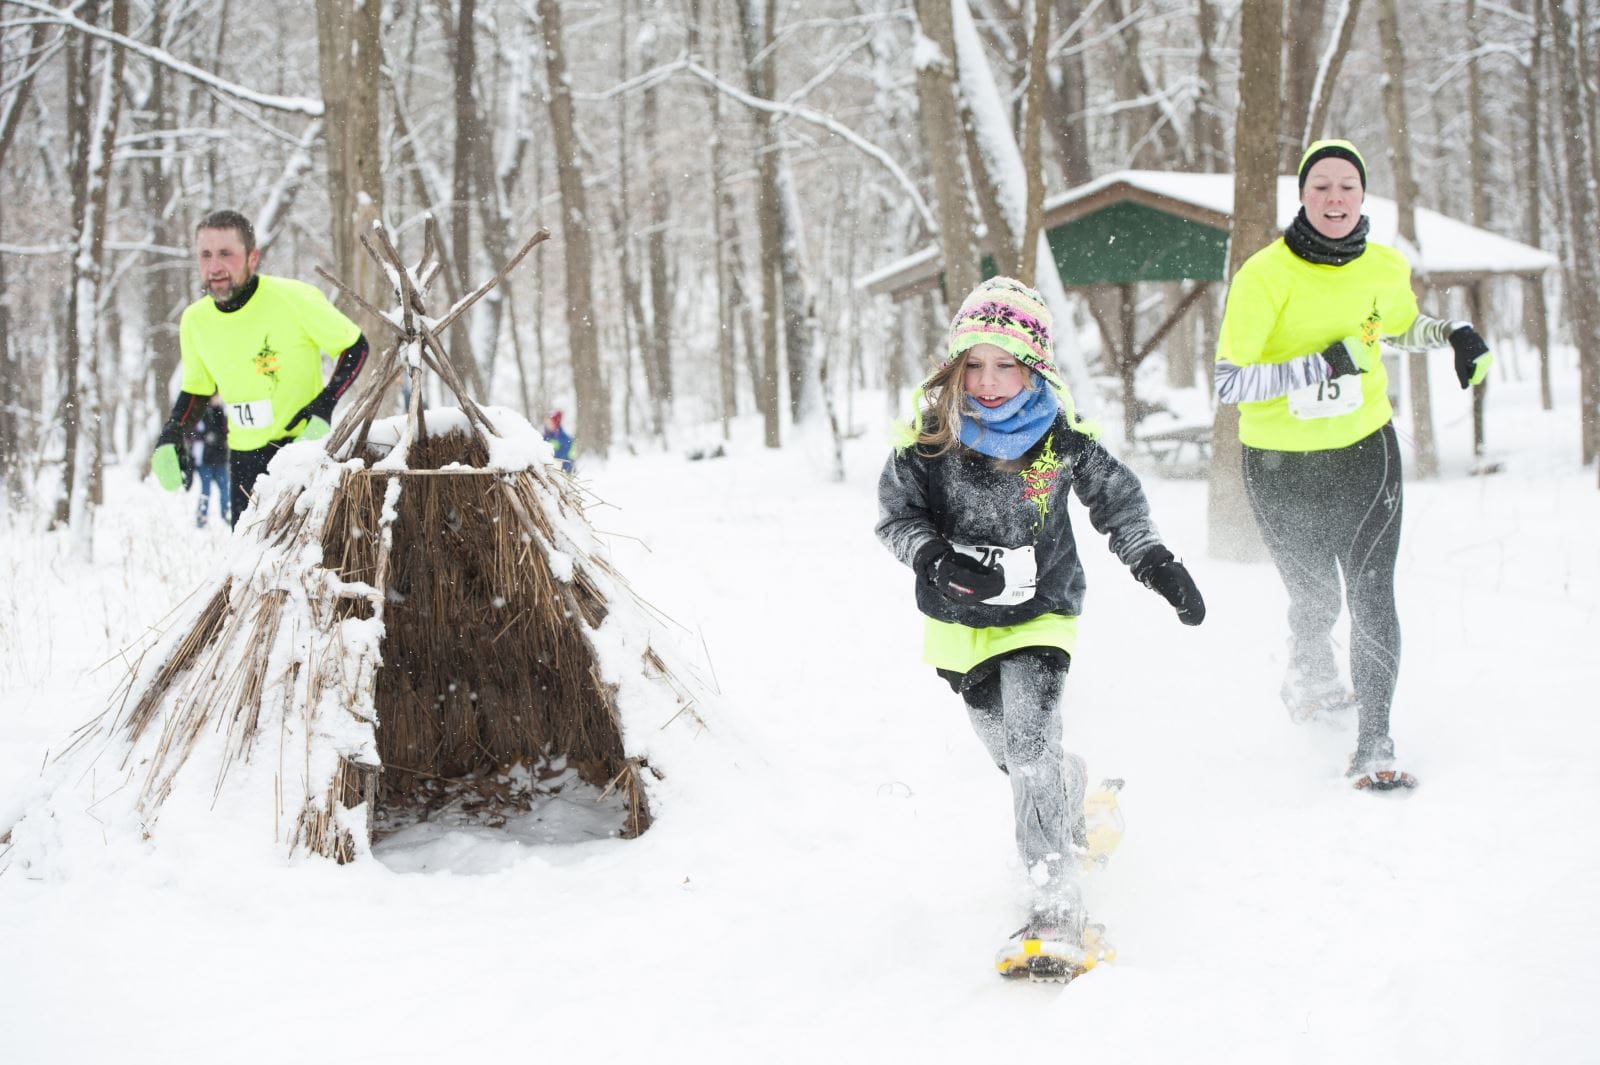 Iowa Games Snowshoe Race and Family Fun Hike | Winter Activities Blog Post | Cedar Falls, Iowa